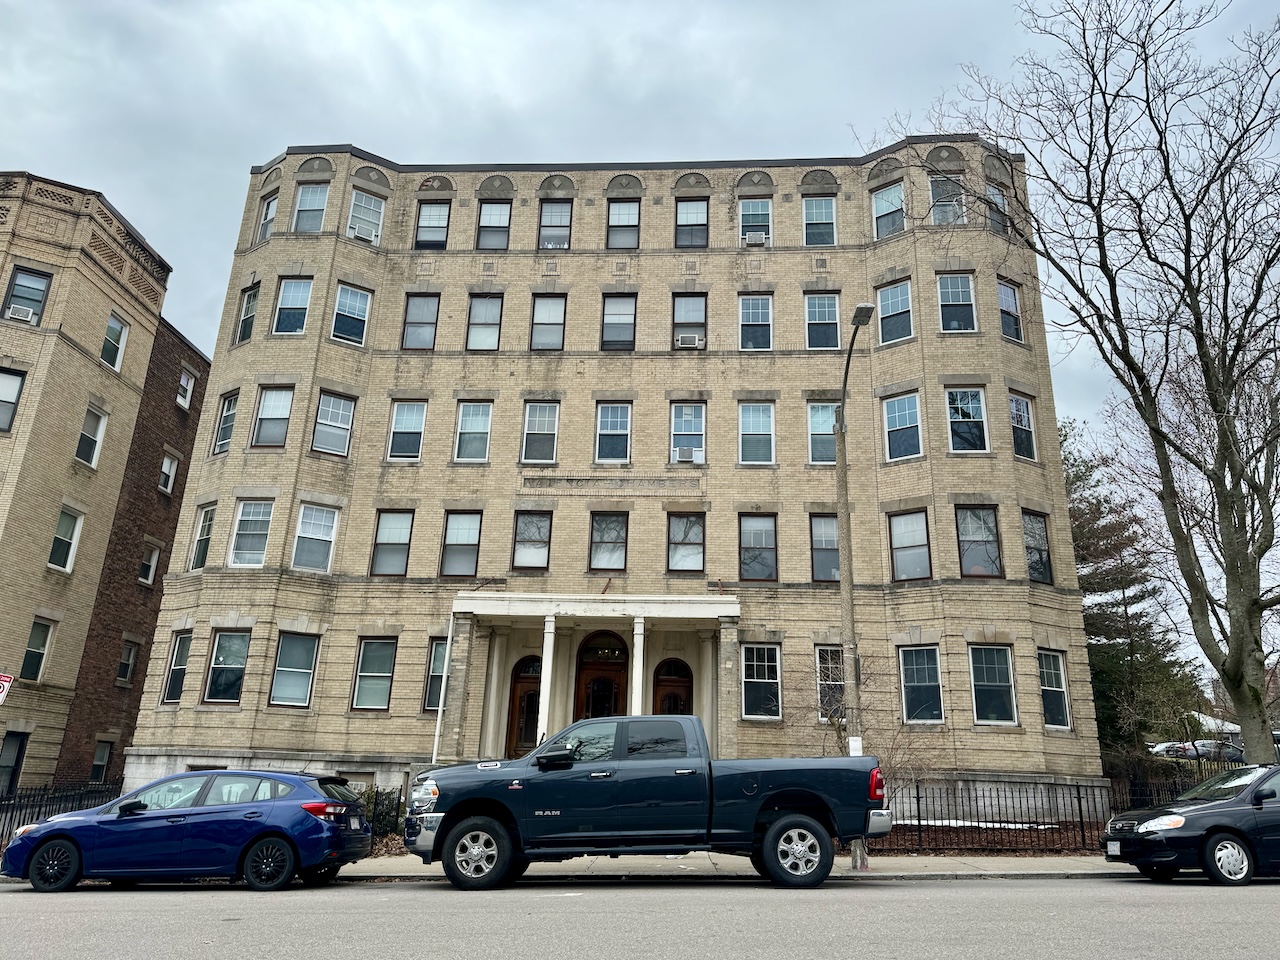 Photos of apartment on Beechcroft St.,Boston MA 02135